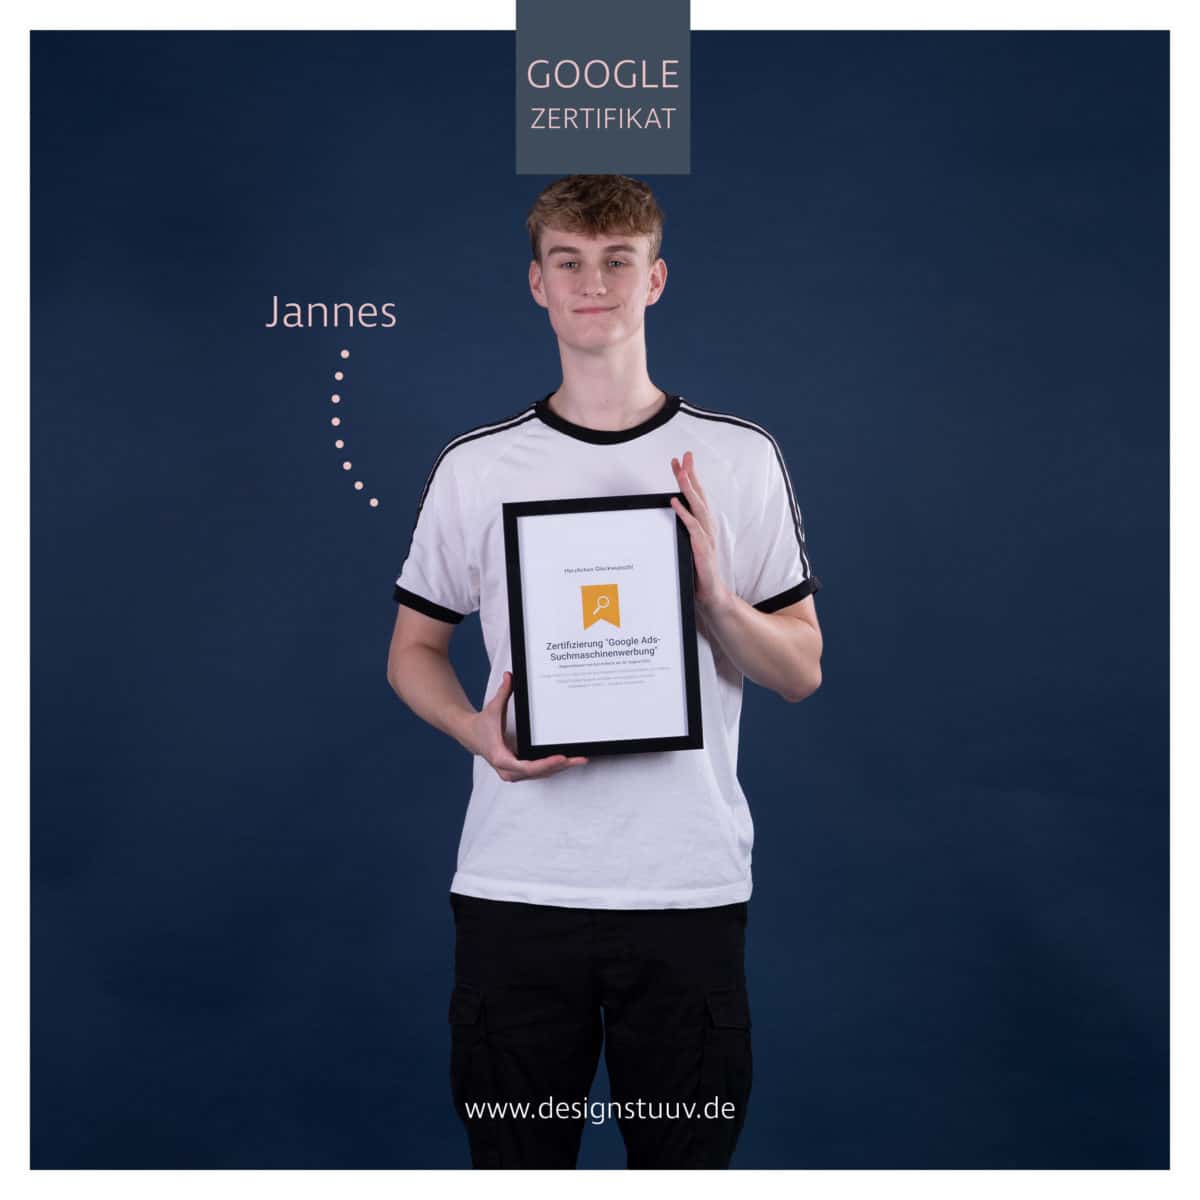 Google-Zertifikate-jannes-jonas-eric6